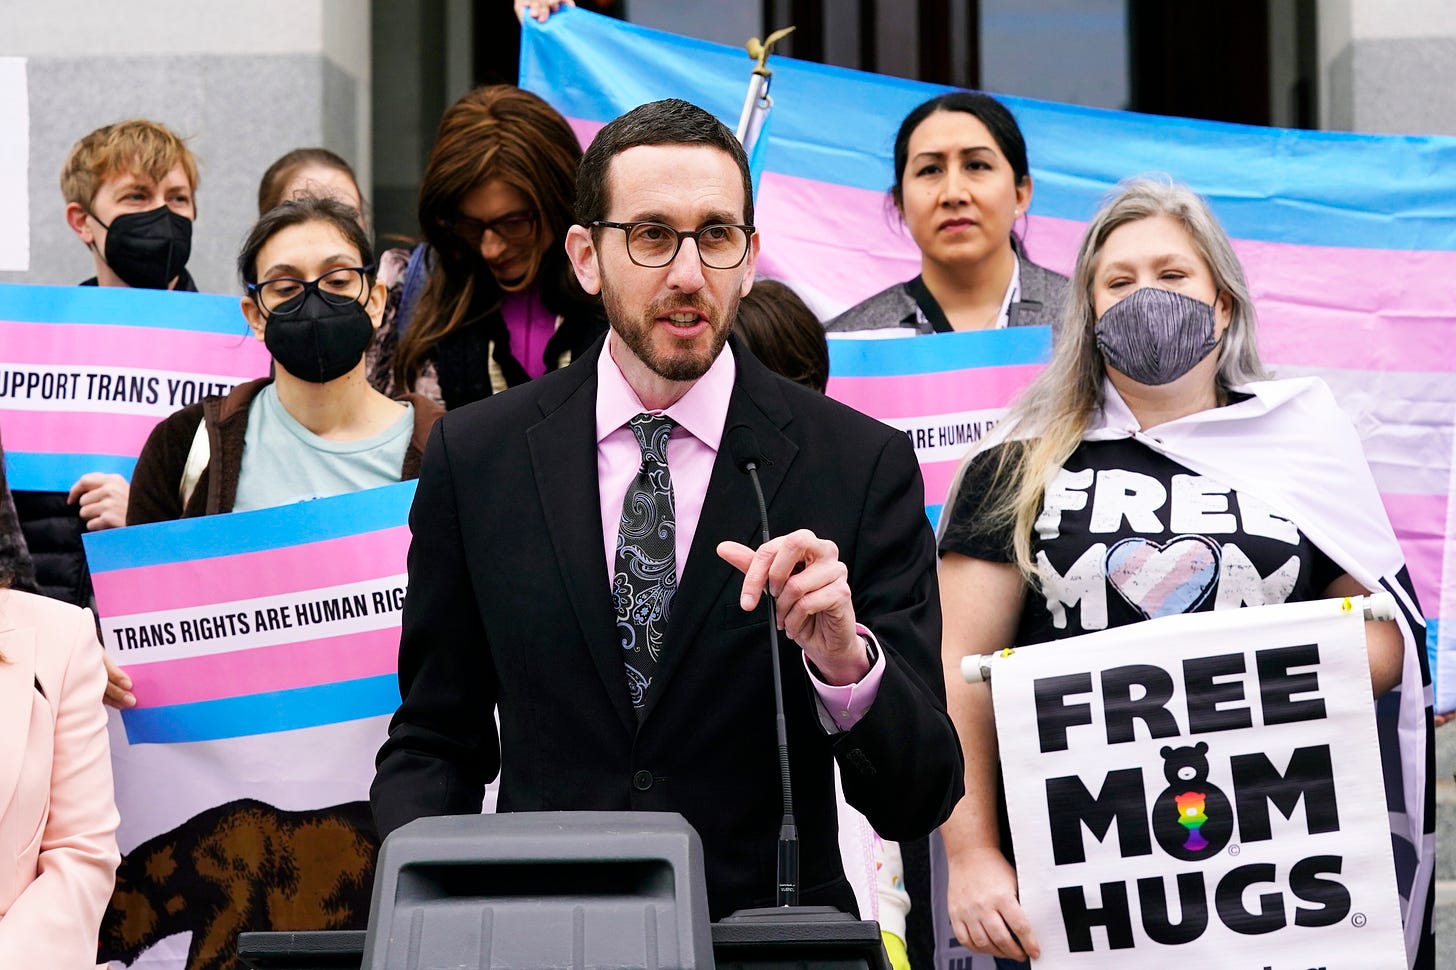 Bill promotes California as U.S. refuge for transgender youth